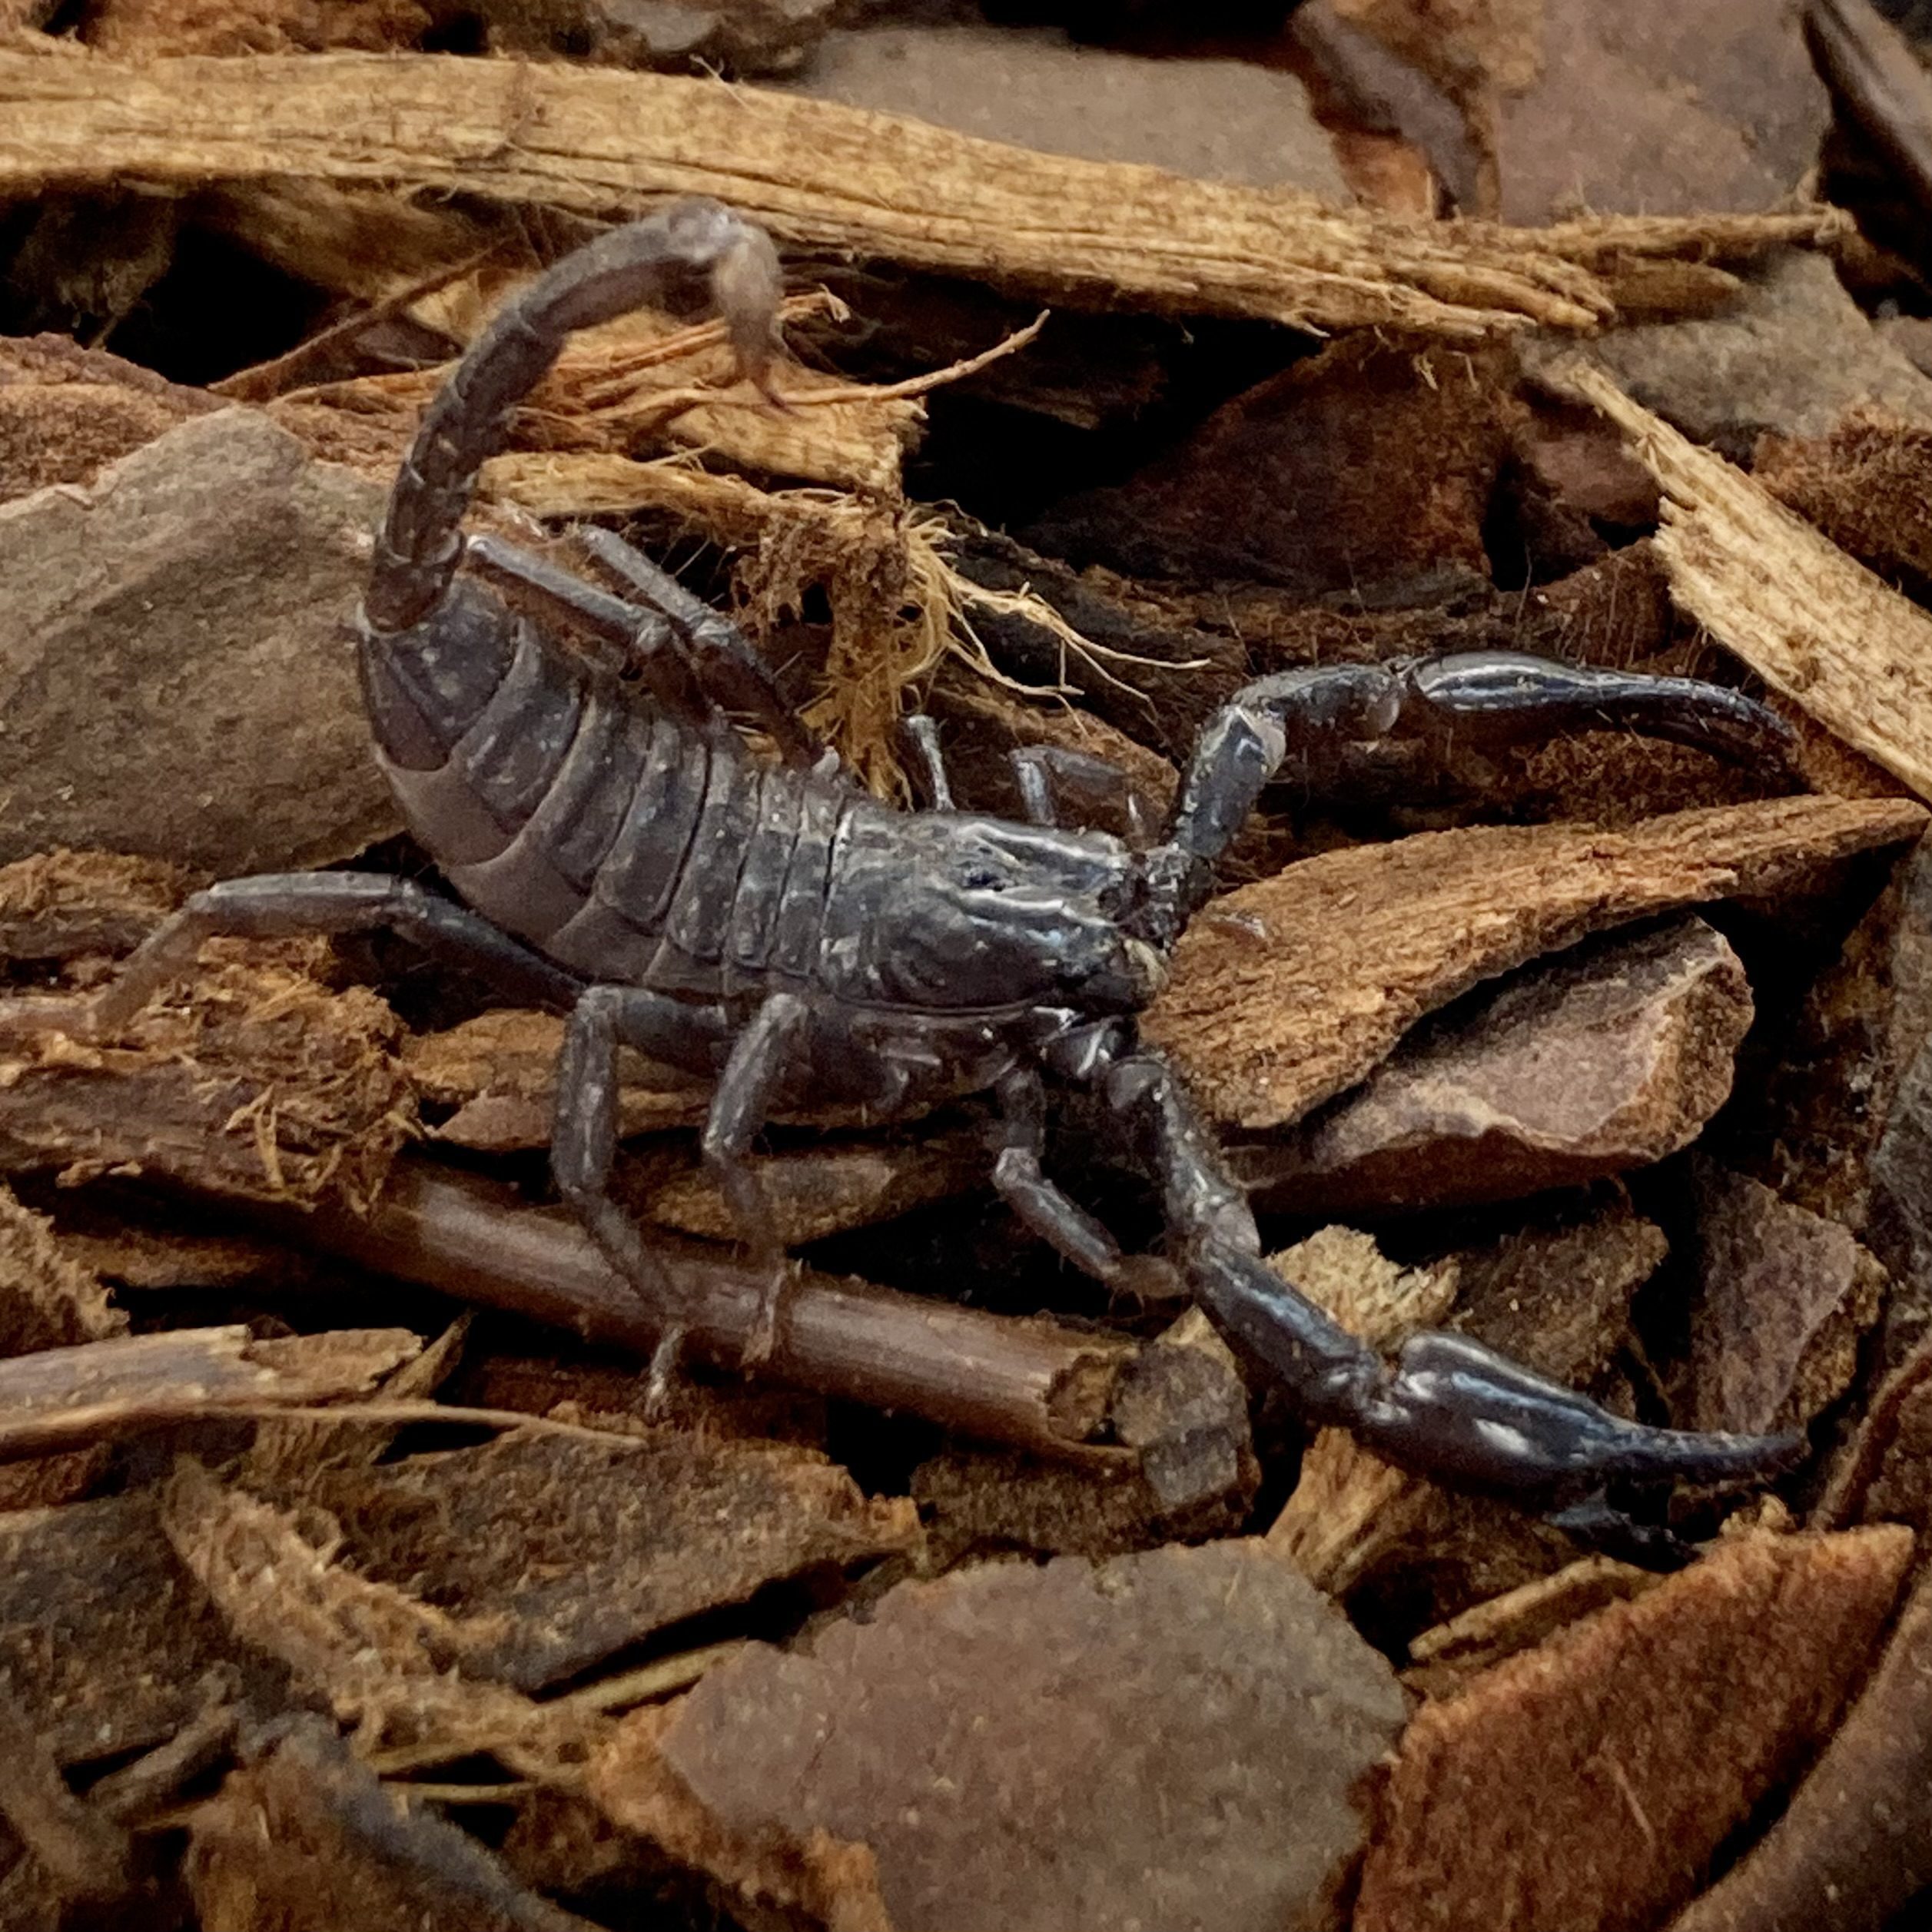 WC Thai Forest Scorpion